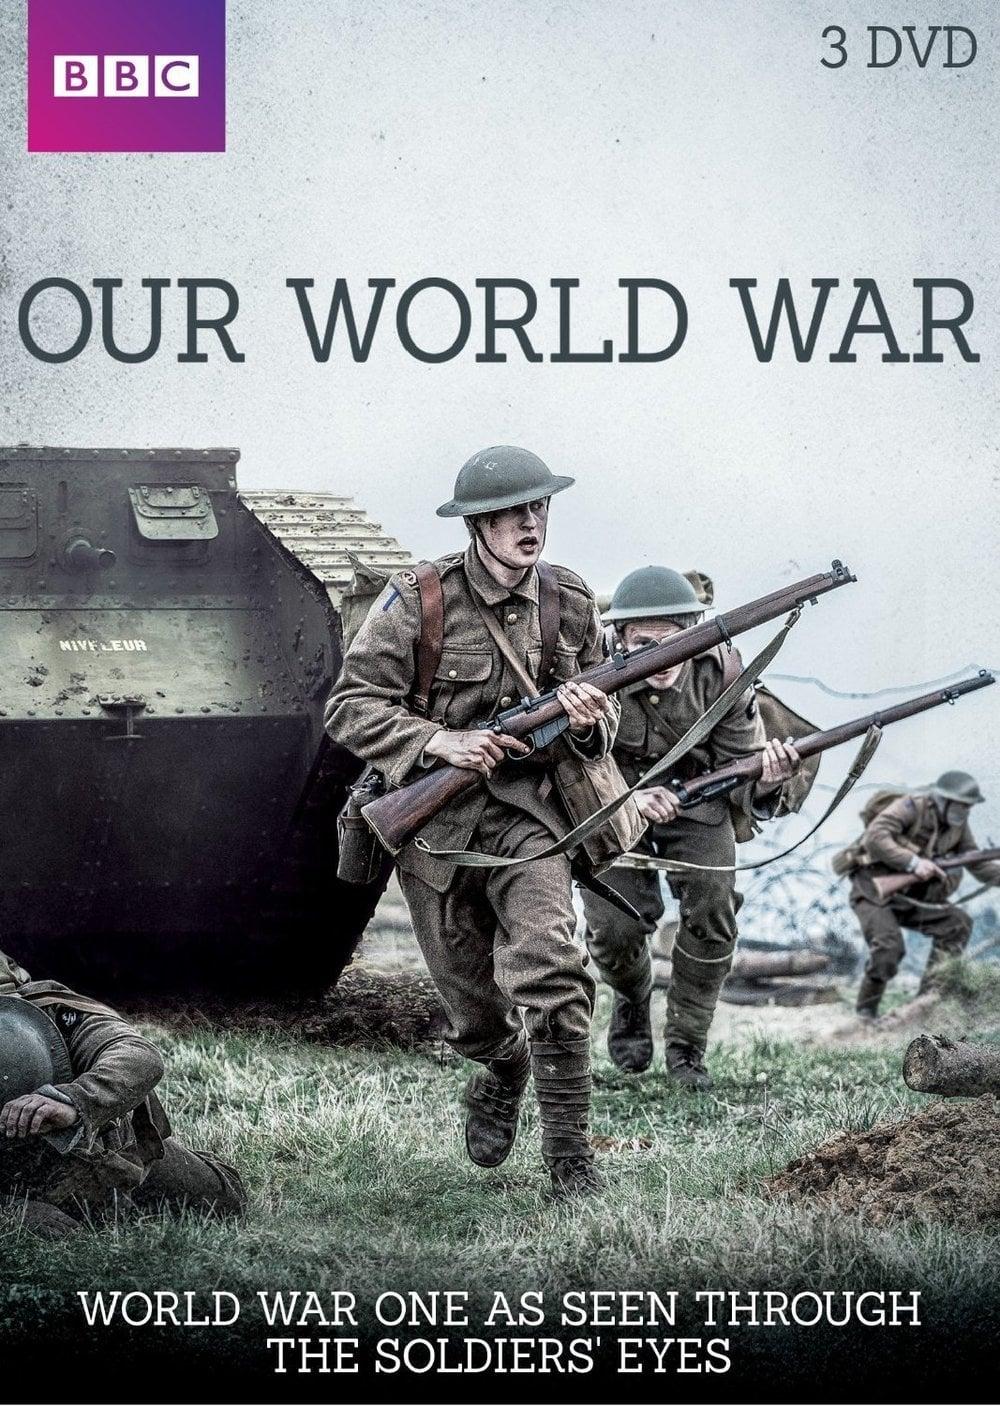 Our World War poster